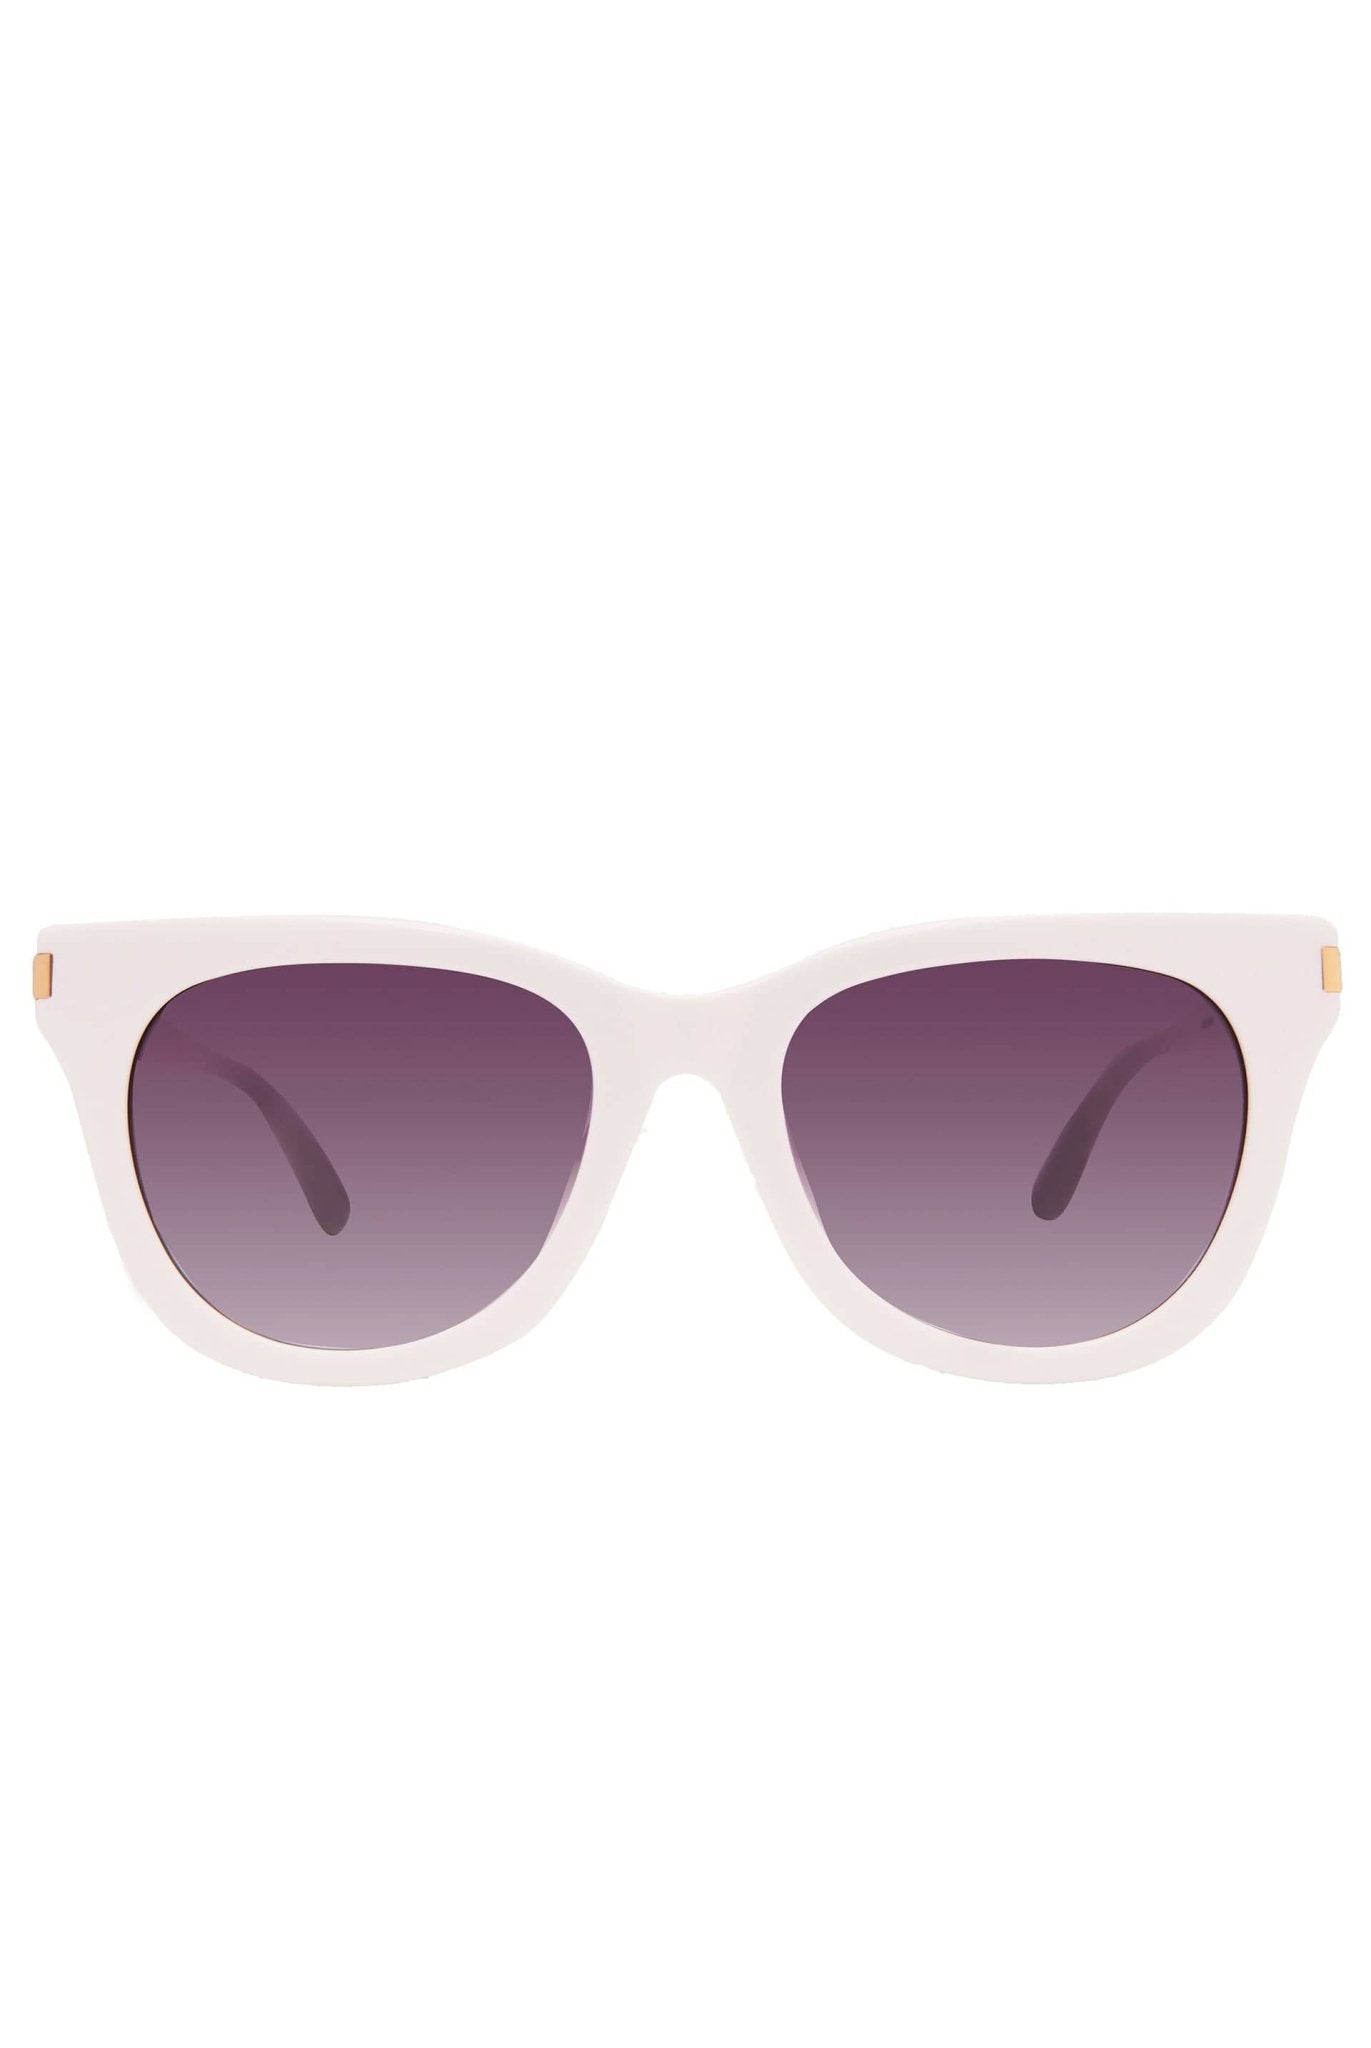 The Grace Sunglasses in White - Heidi Klein - UK Store